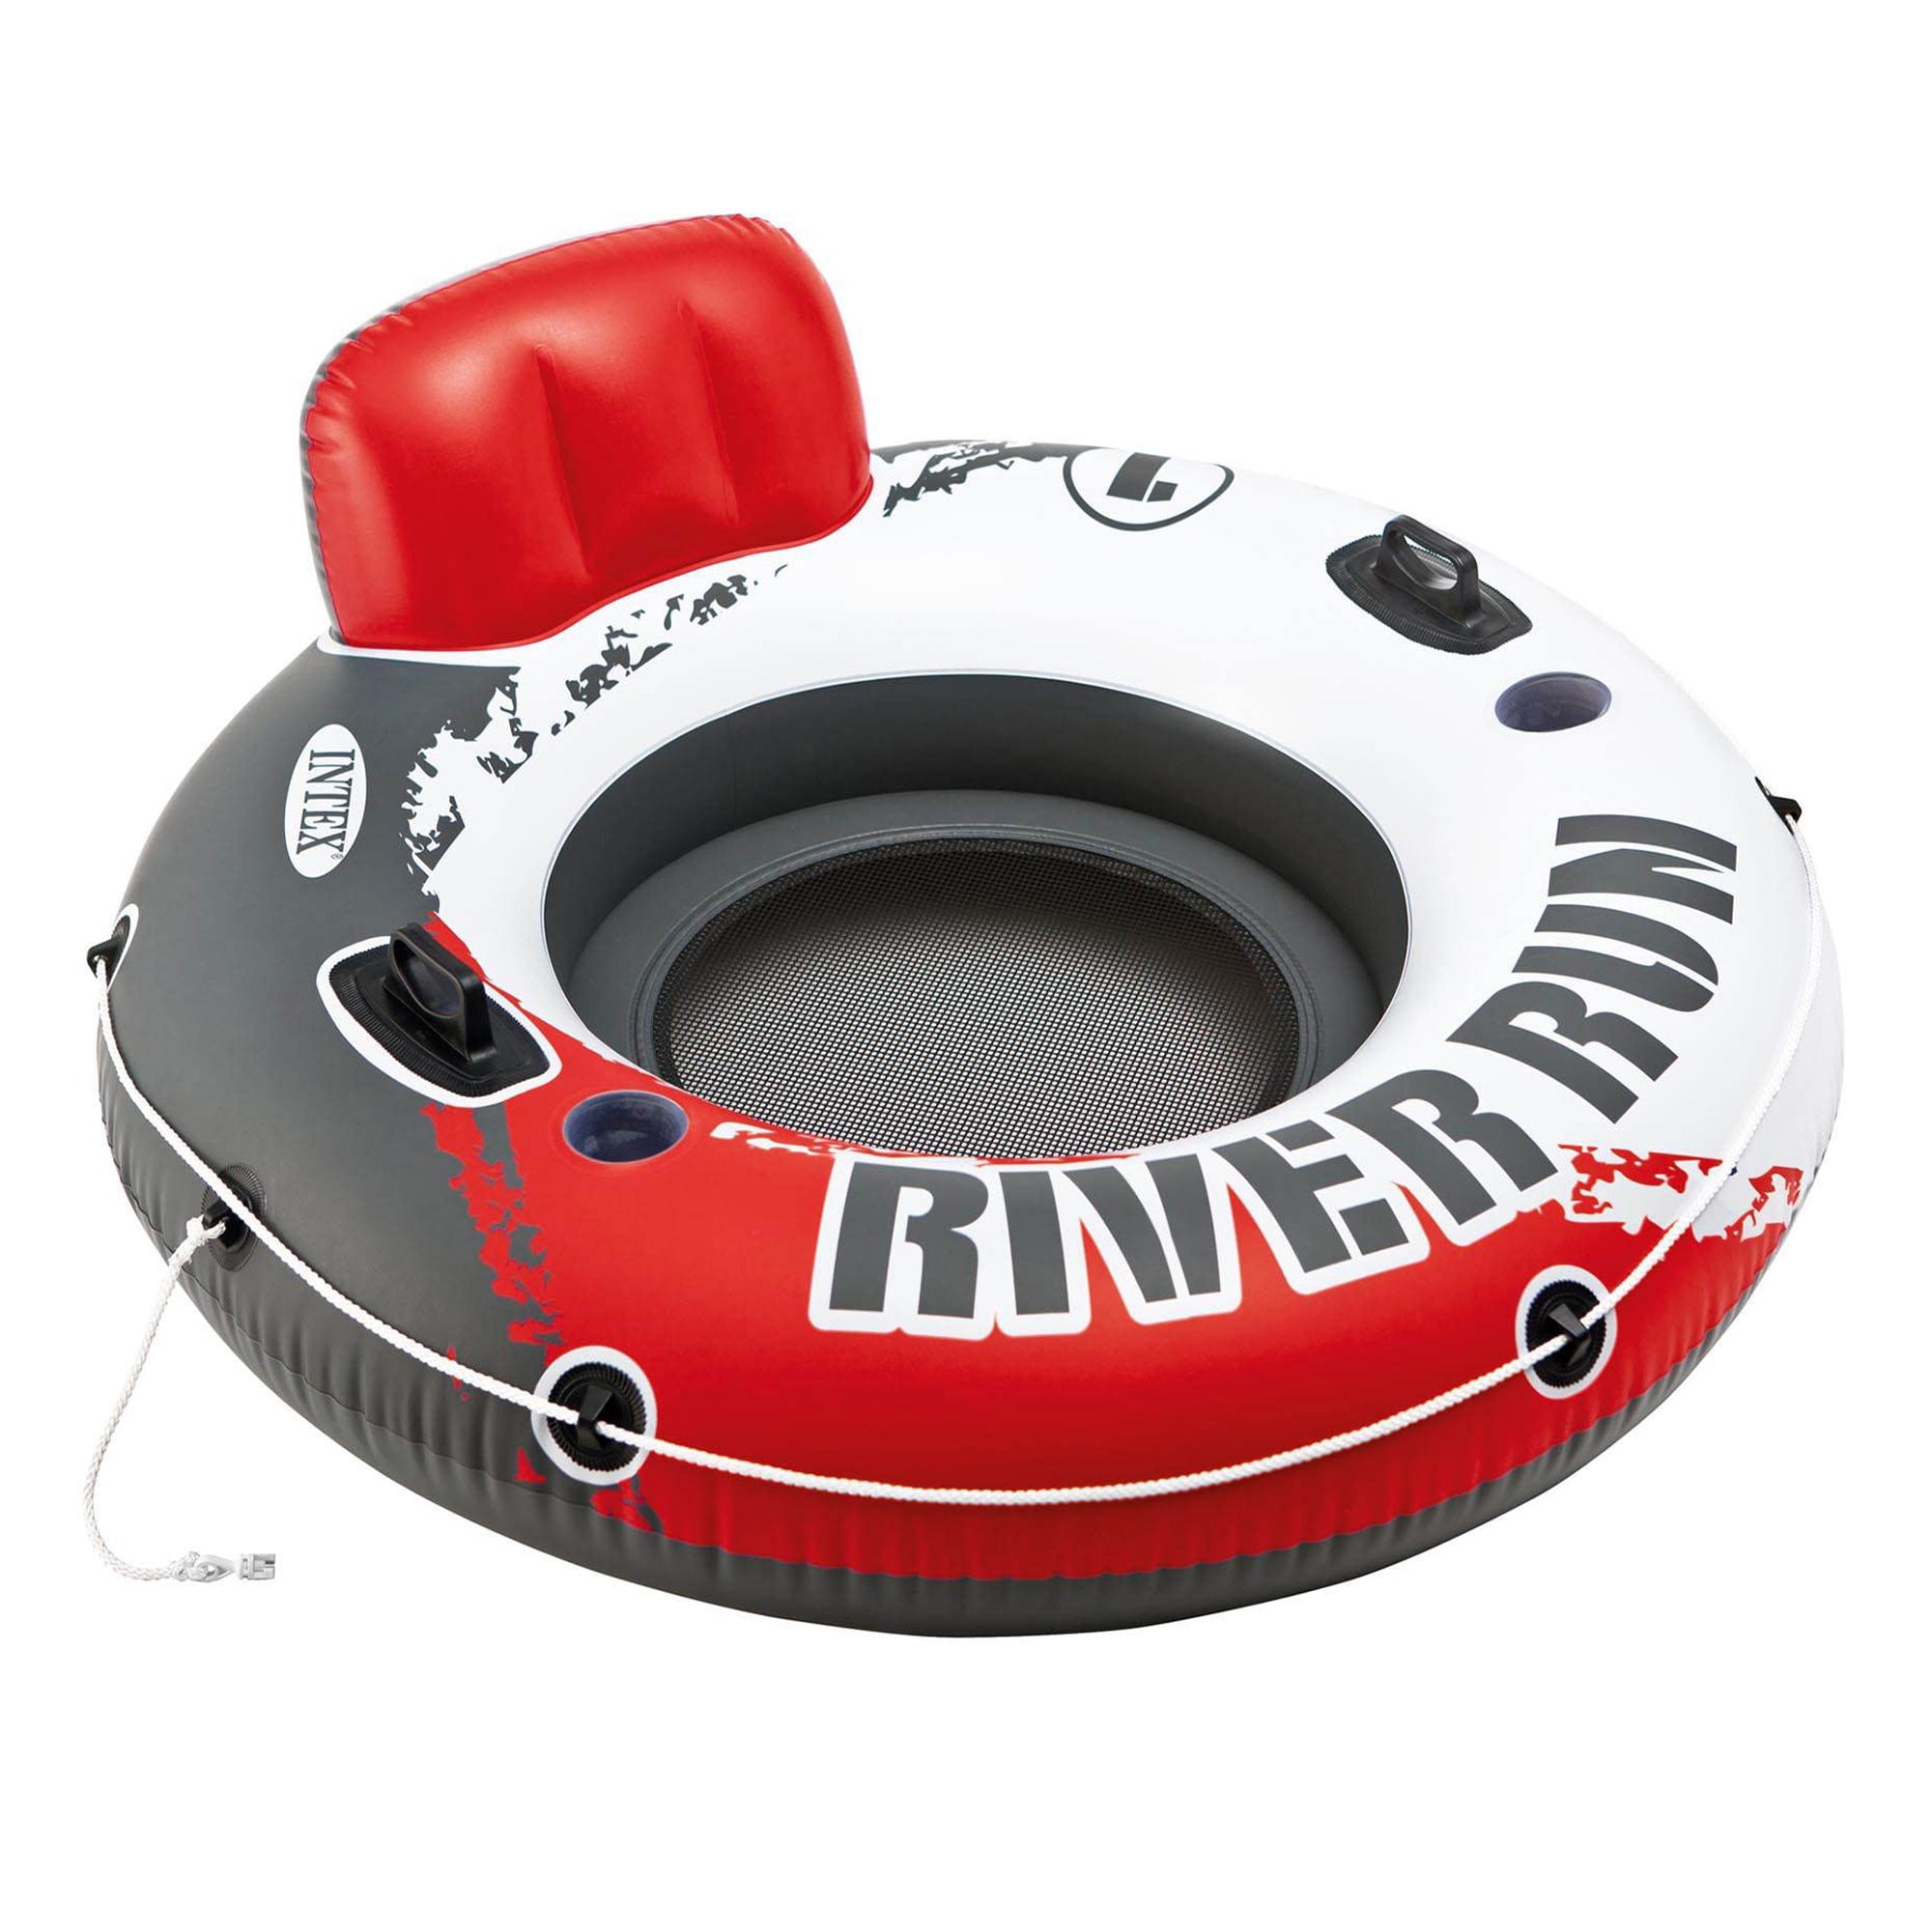 Intex River Run 1 53 Inflatable Floating Water Tube Lake Raft, Red (6 Pack)  